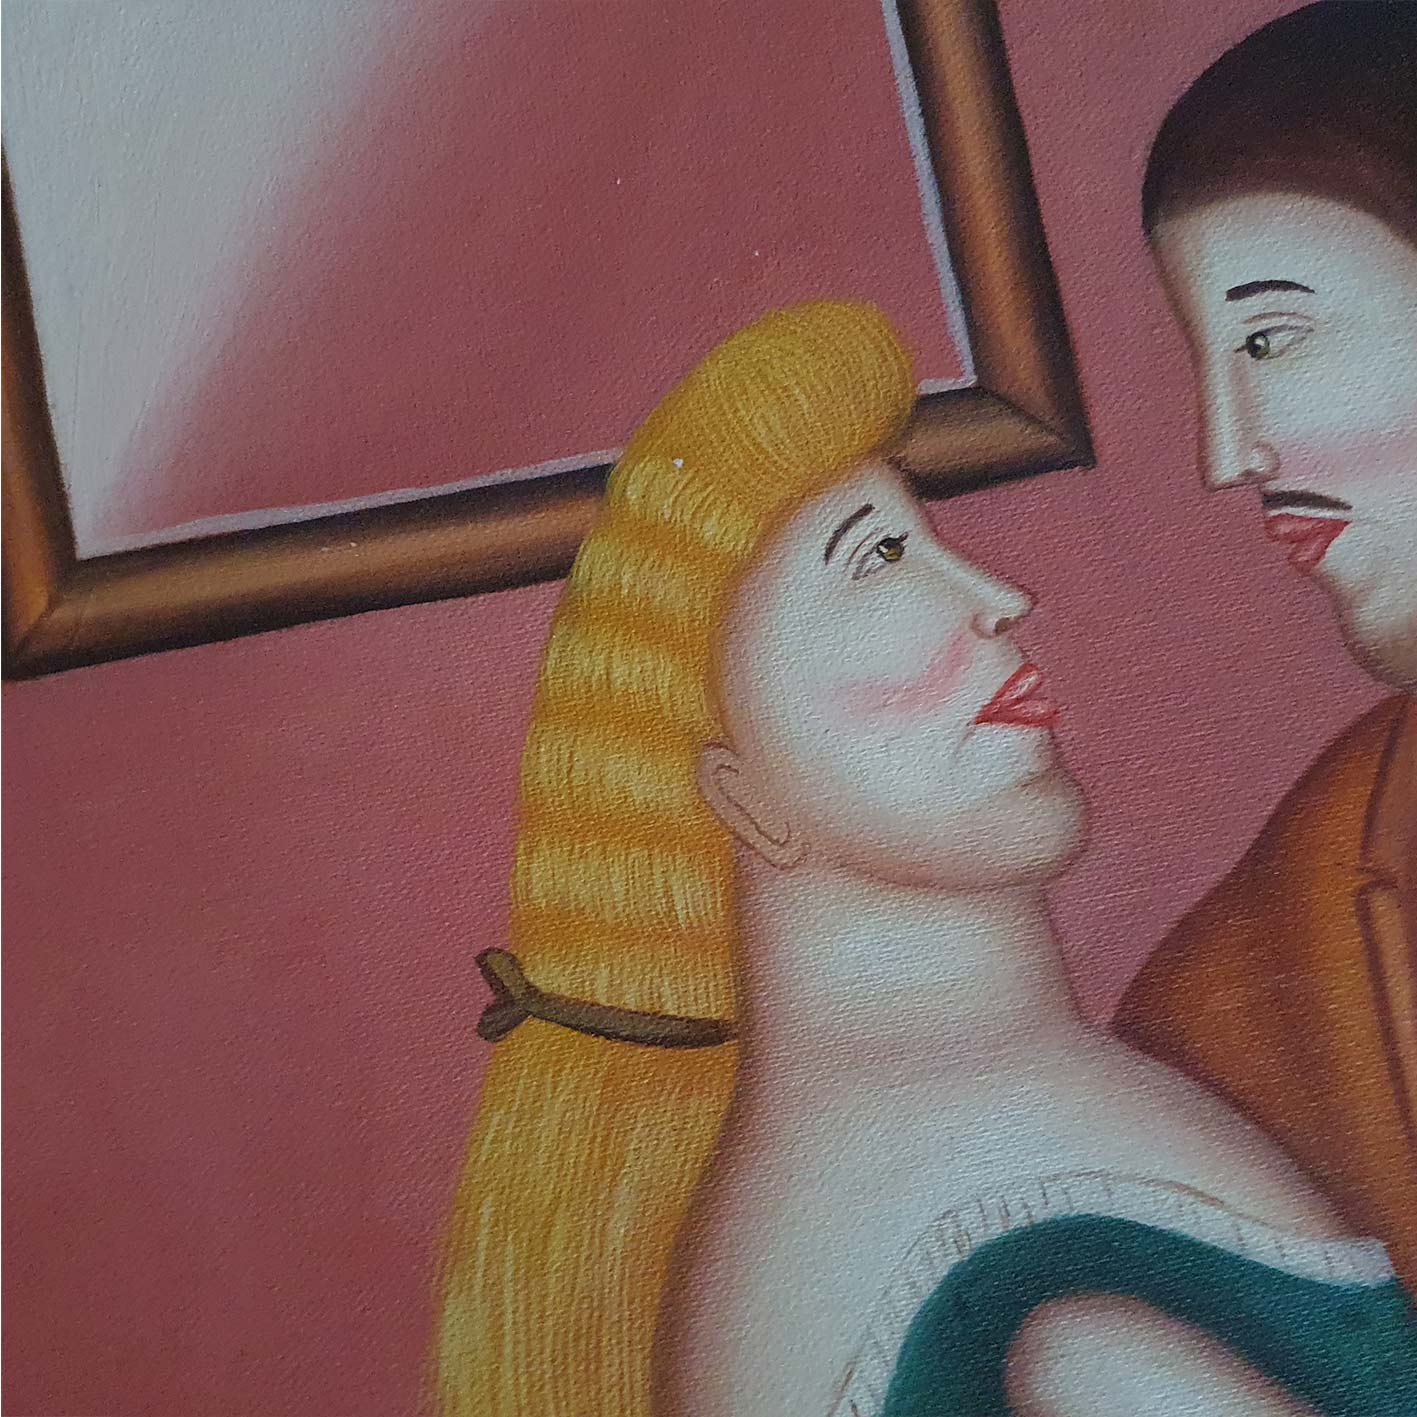 Botero Dance Painting 50x60 cm